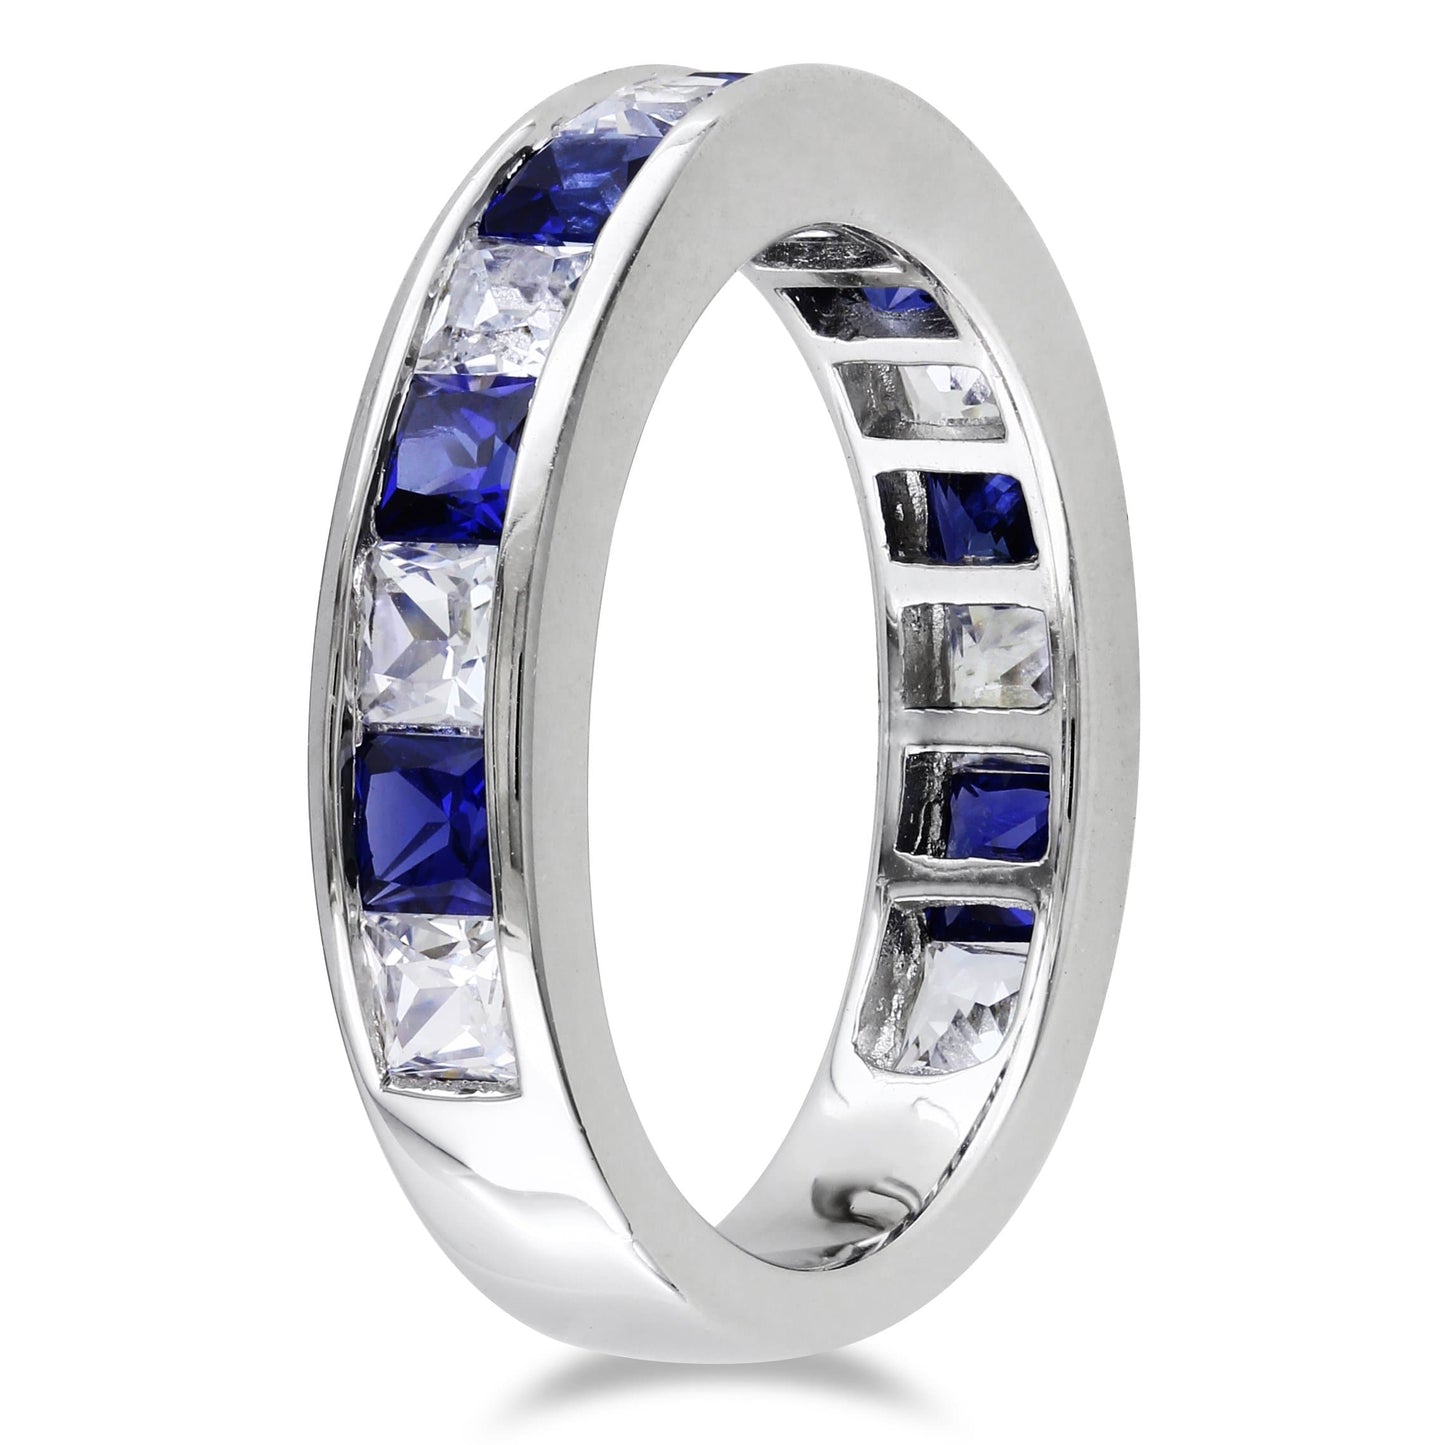 Sophia B 2 3/8ct Created White & Blue Sapphire Ring